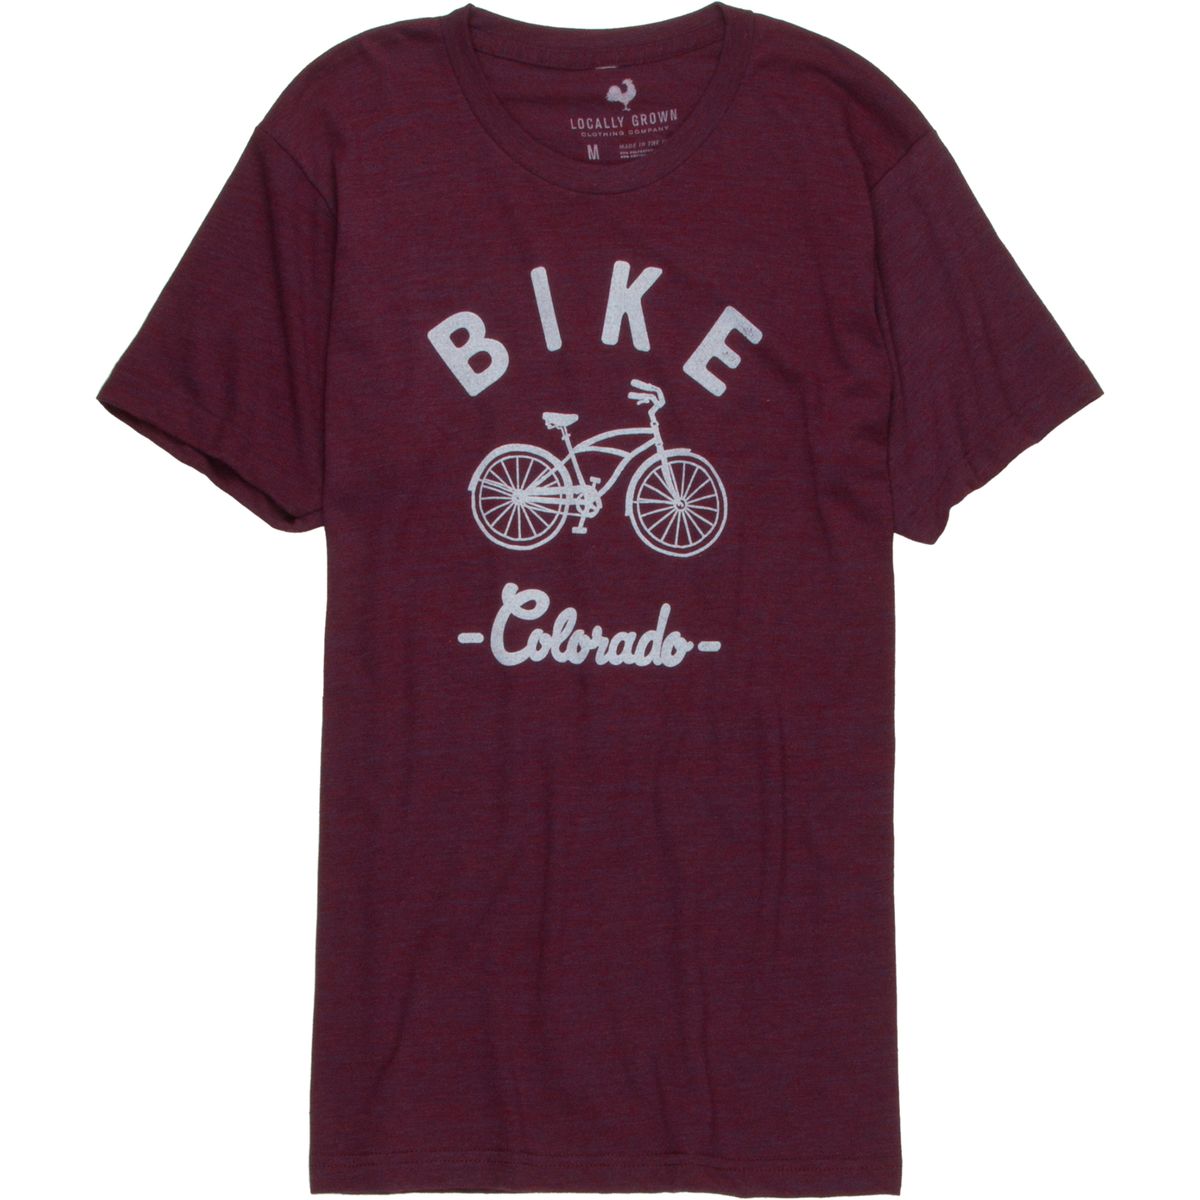 Locally Grown Bike Cruiser Colorado Tri-Blend Vintage T-Shirt - Short-Sleeve - Men's